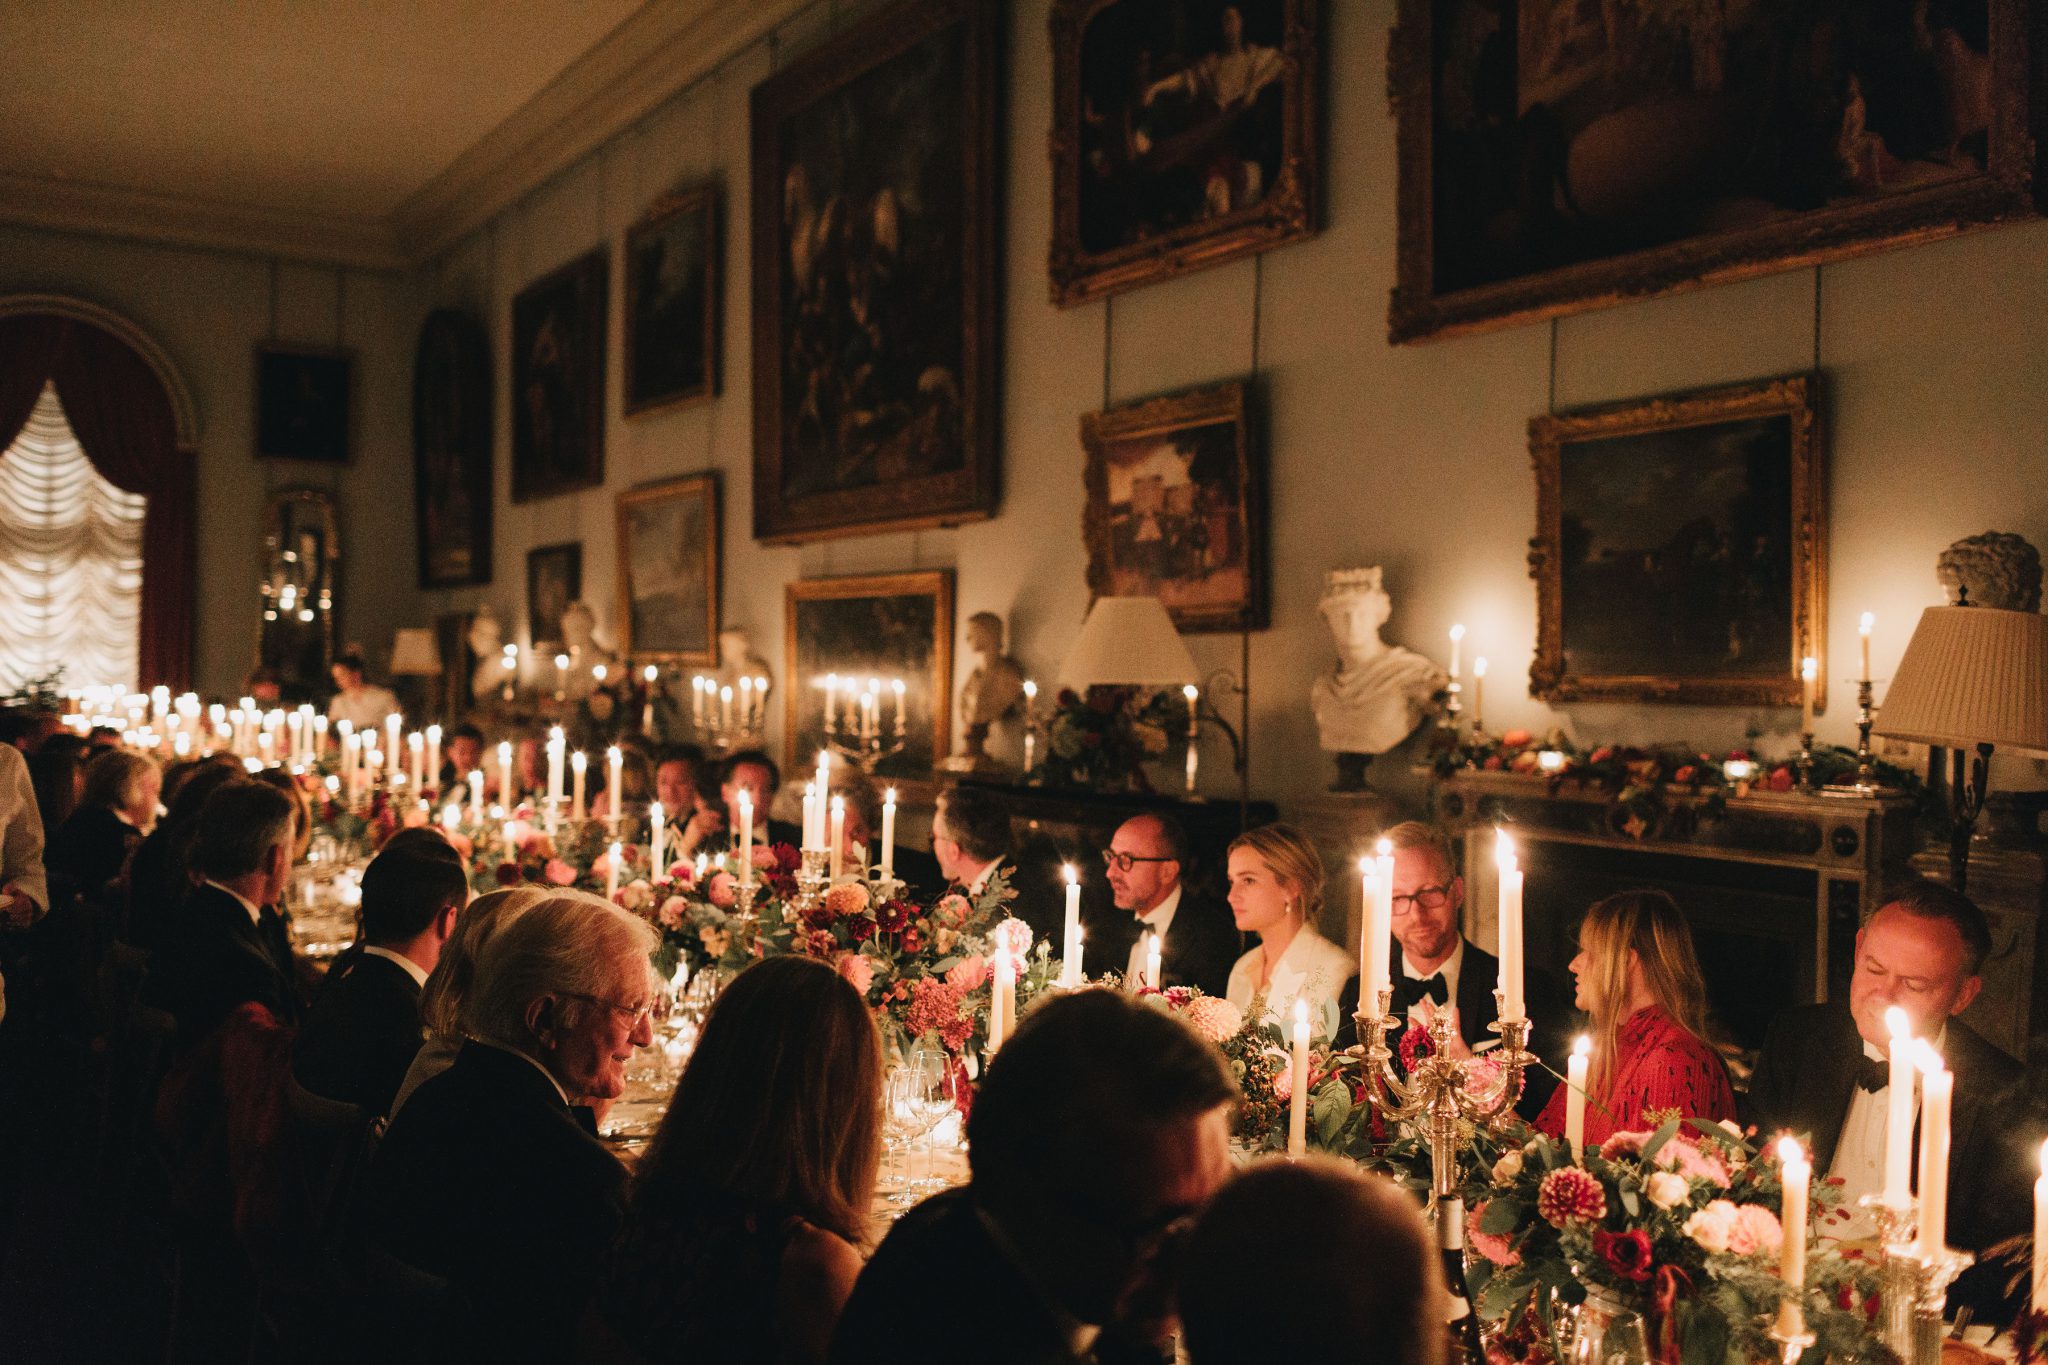 De Gournay Celebrates Lavish Houghton Hall-Inspired Design with Black Tie Dinner